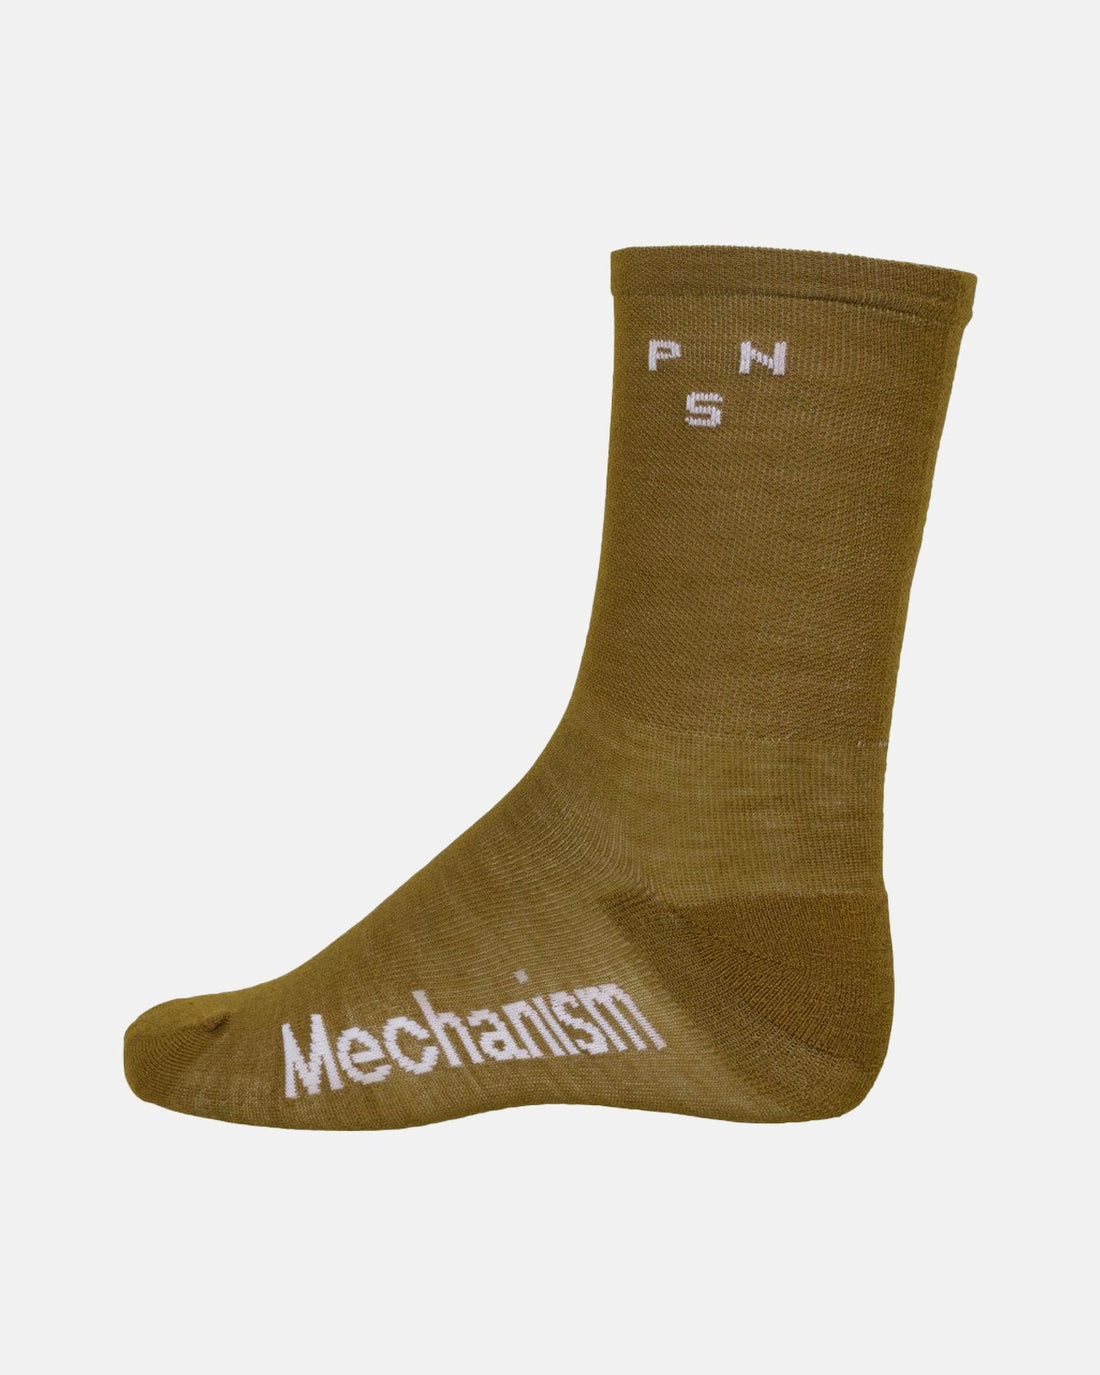 Mechanism Thermal Socks - Terrain